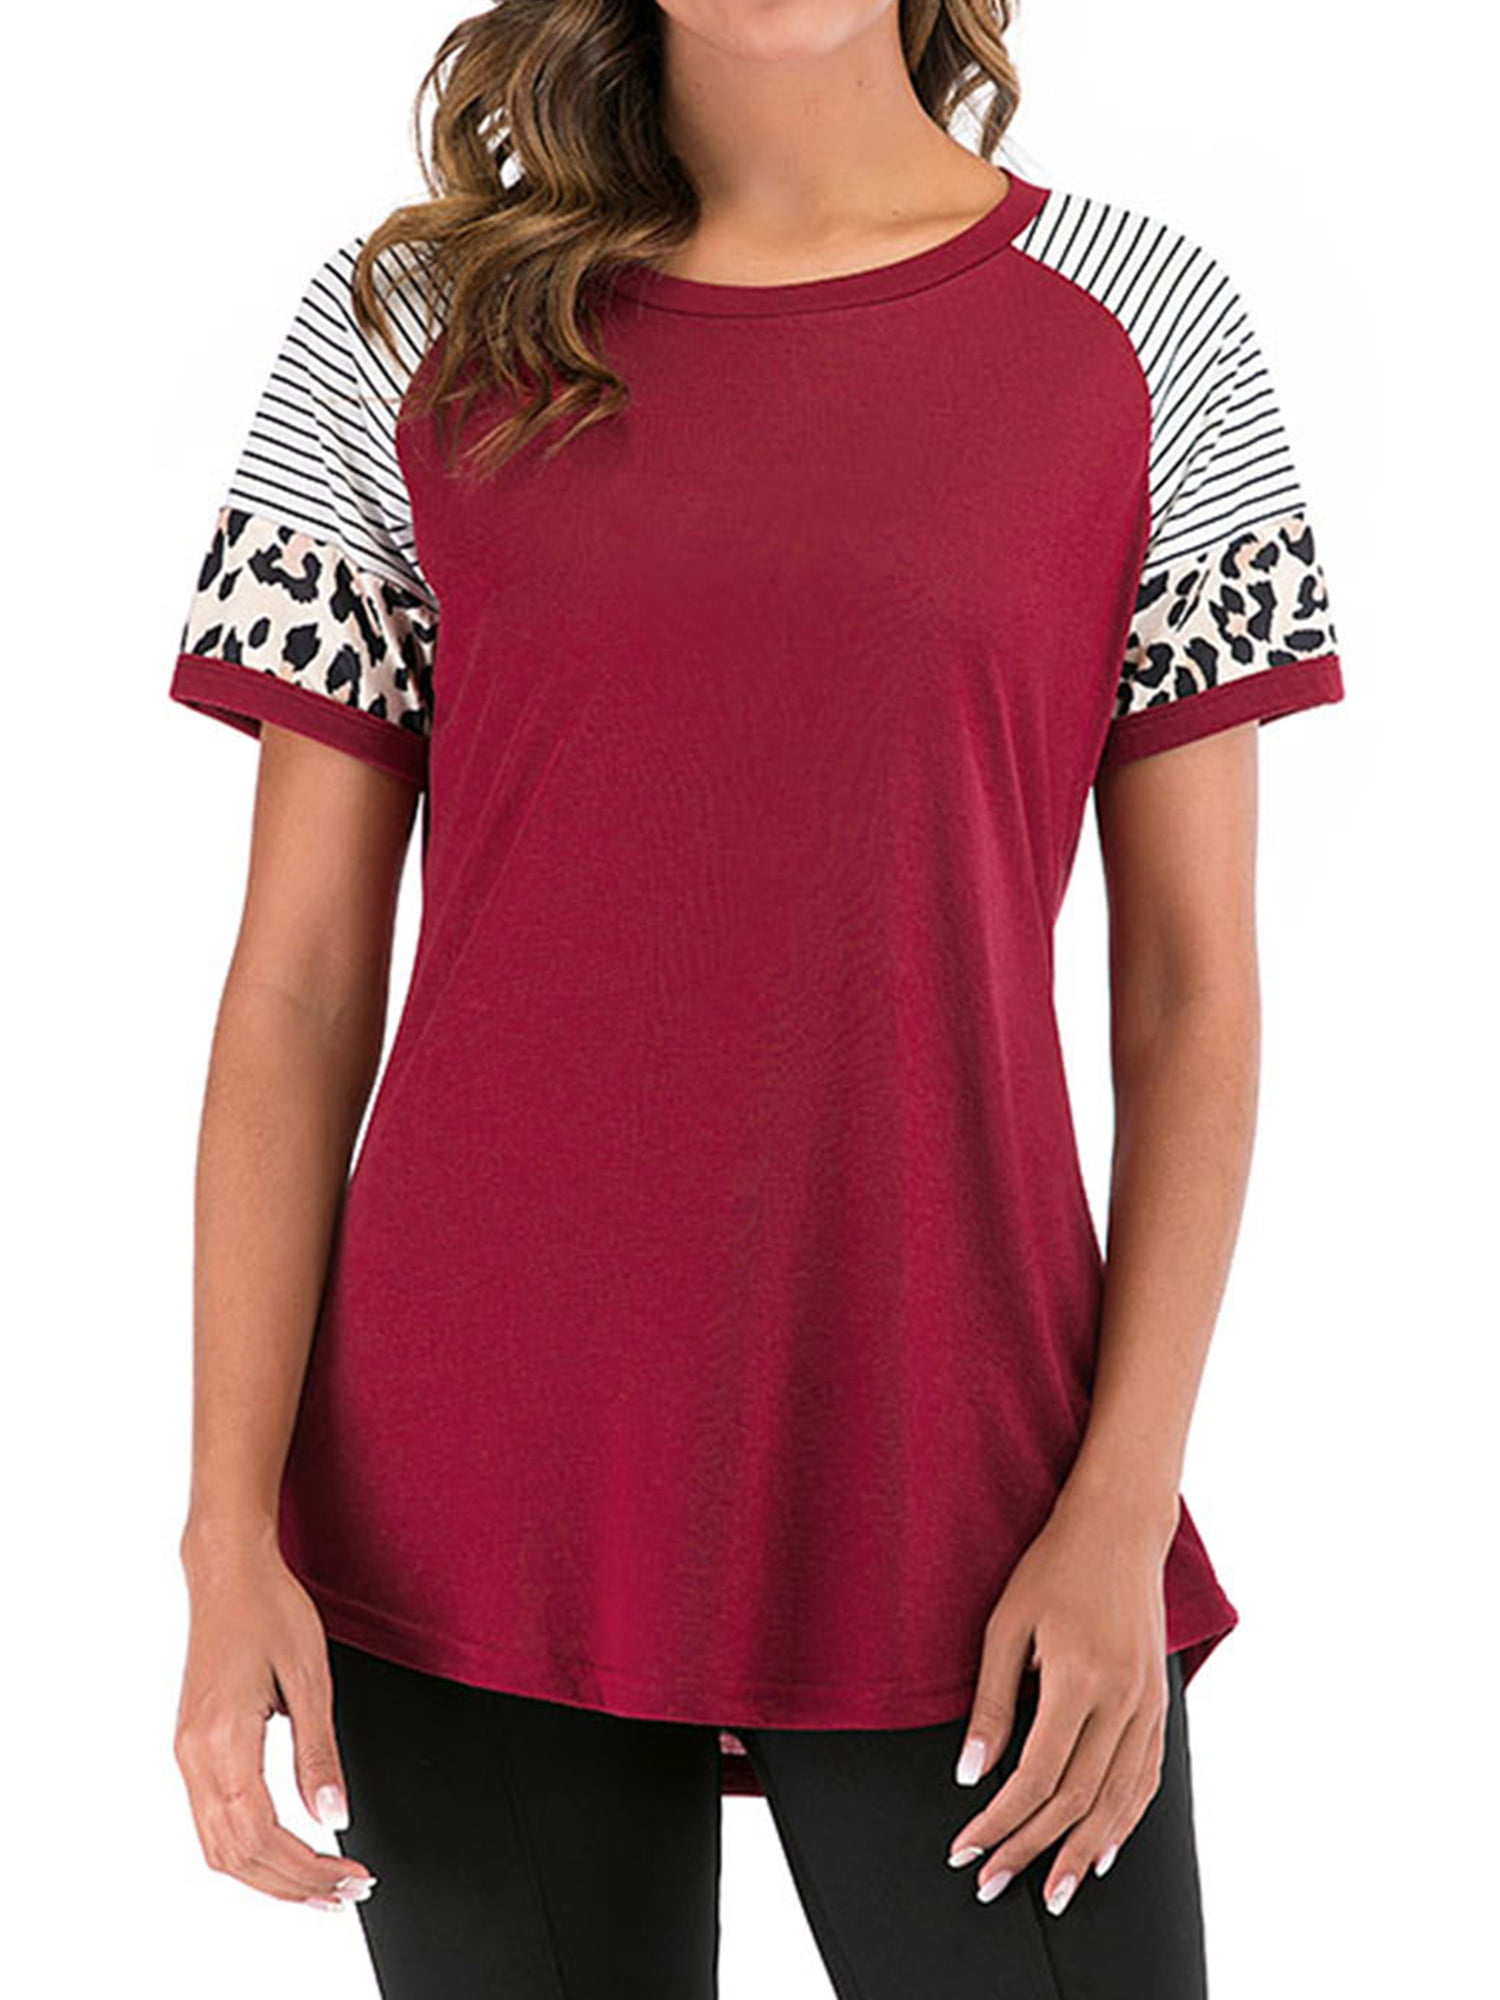 Womens Color Block T-Shirt Short Sleeve Leopard Print Tunic Tops Casual Stripe Crewneck T Shirt Top 